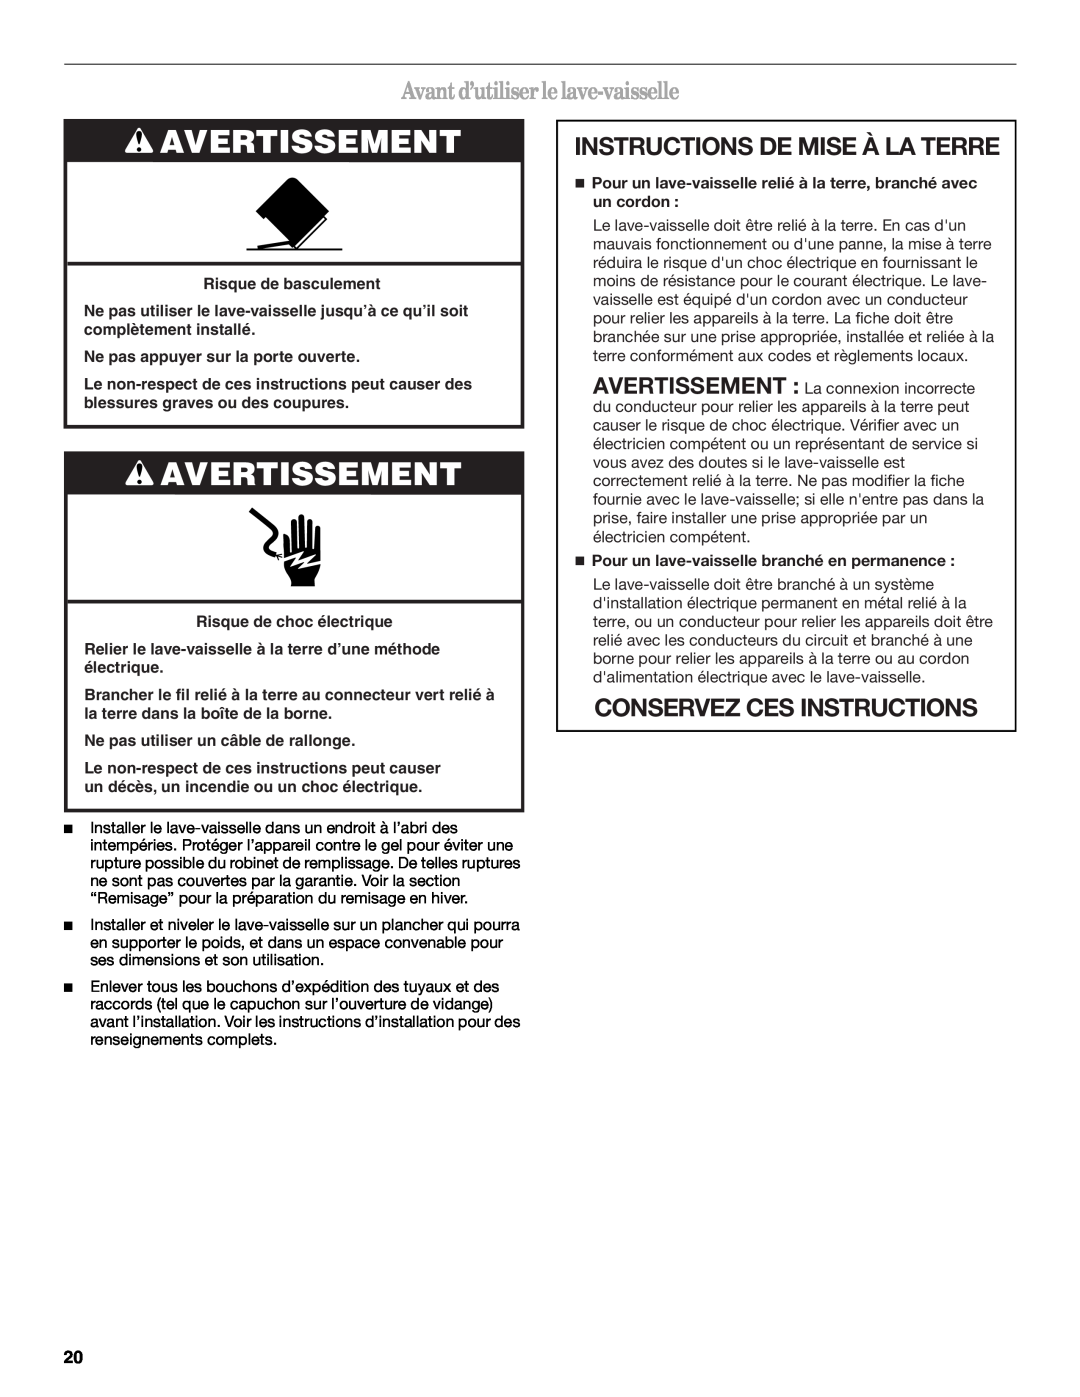 Whirlpool ISU5846 manual Avertissement, Avantd’utiliserlelave-vaisselle, Instructions De Mise À La Terre 